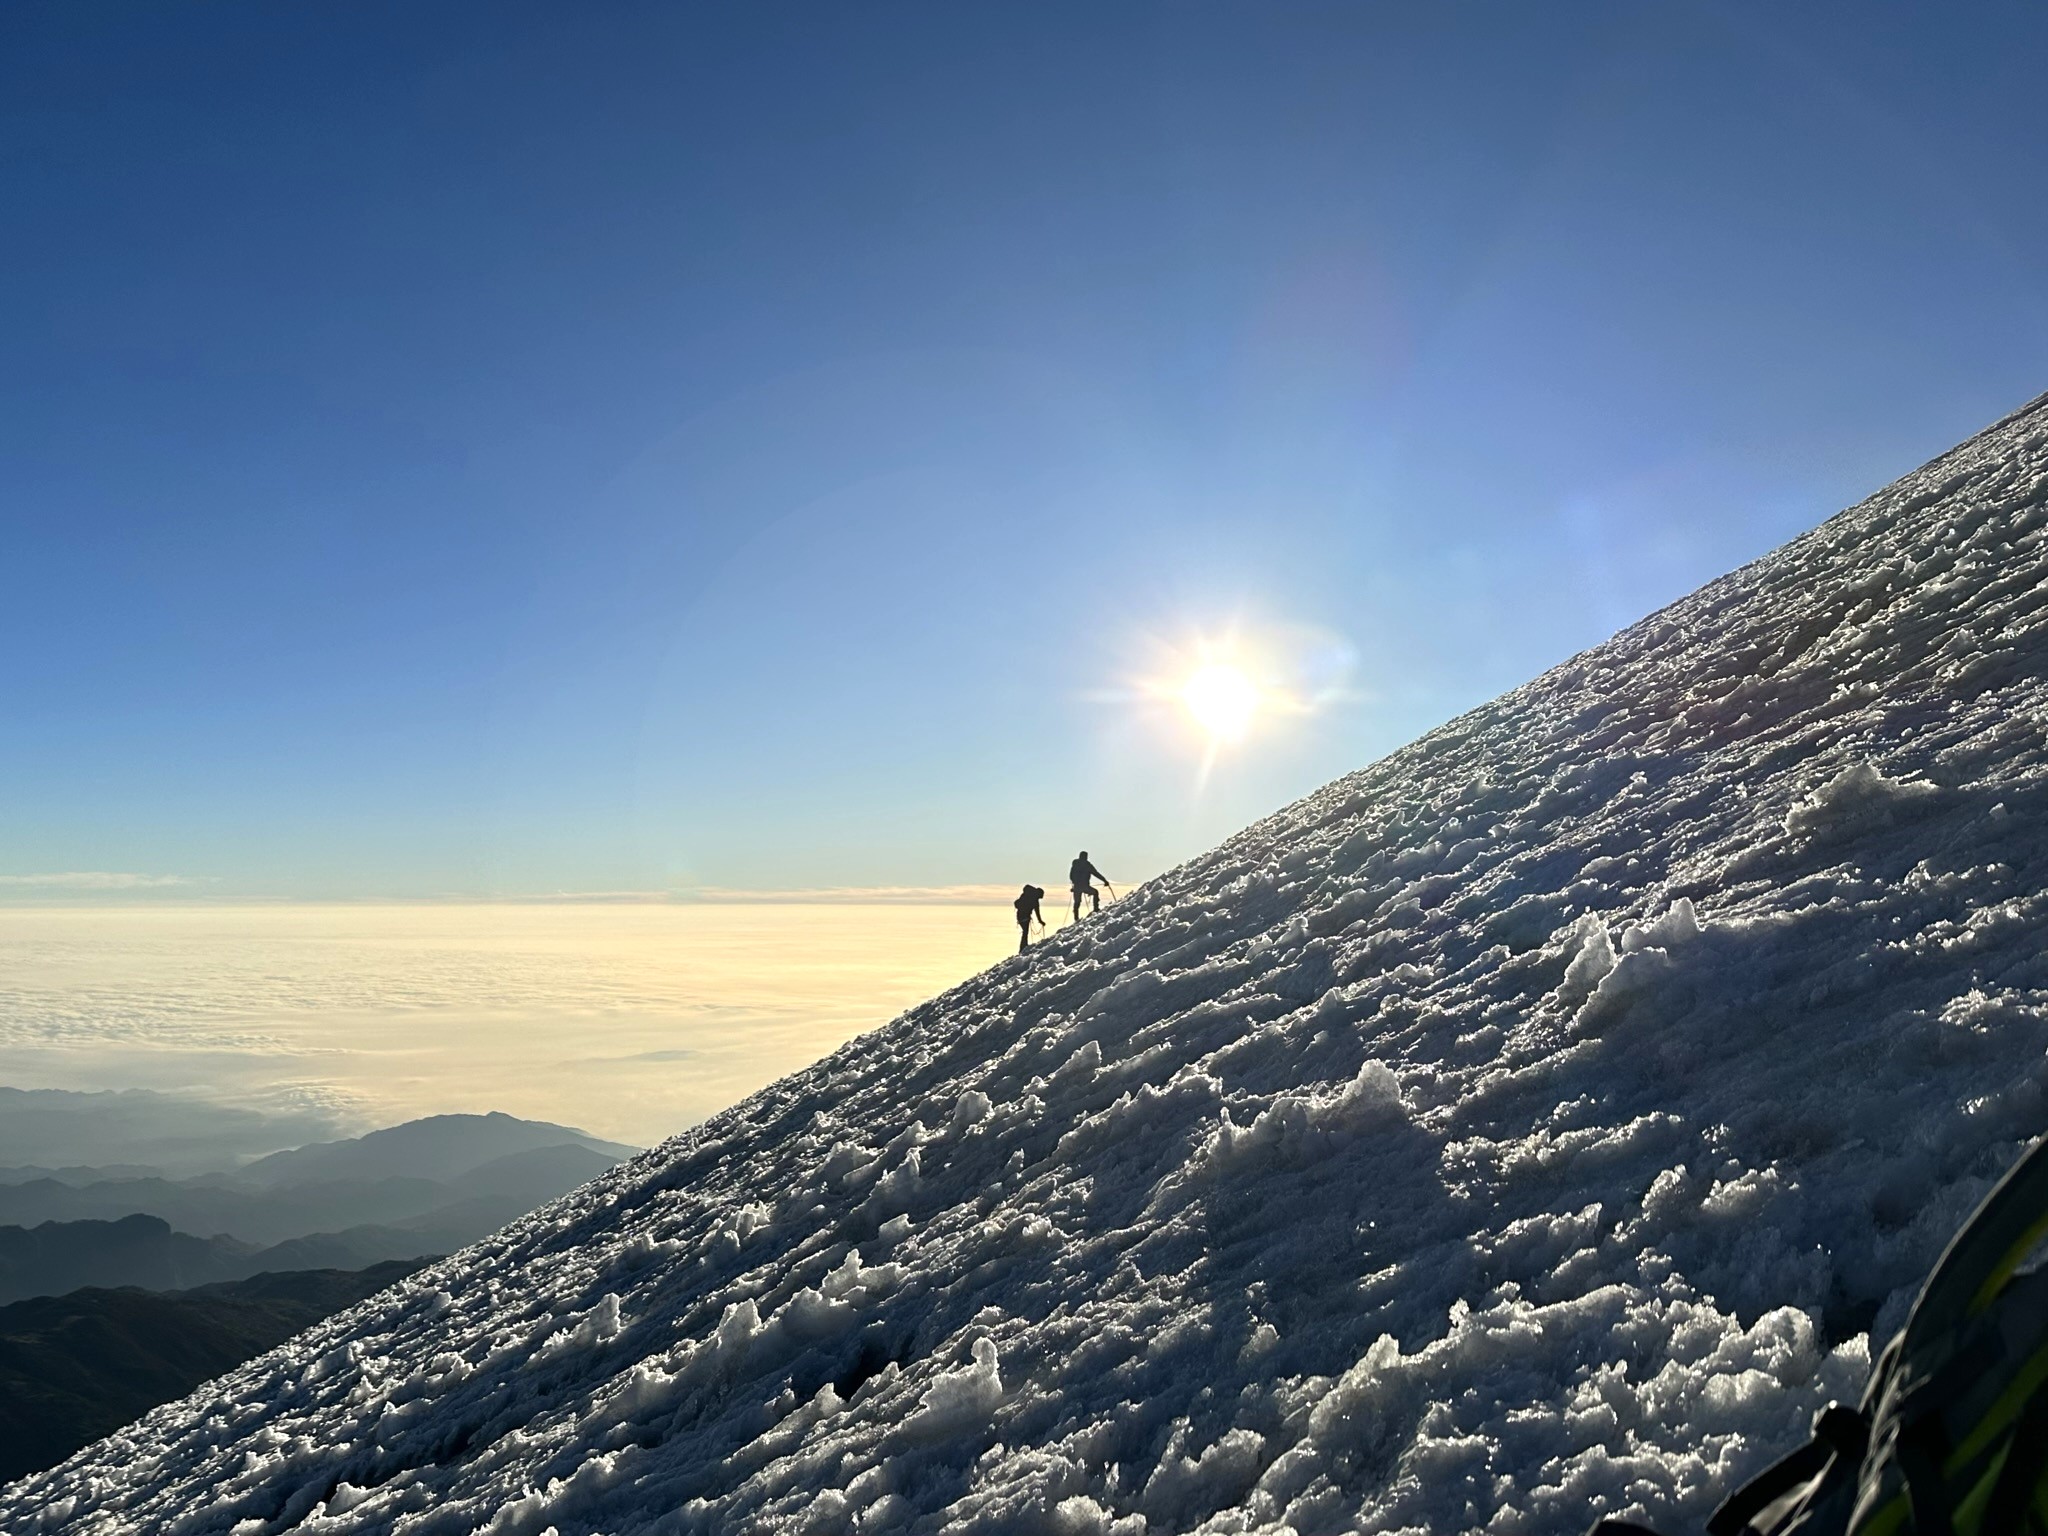 Climbing to Pico de Orizaba’s Summit (5,636m) – Absolutely Relentless